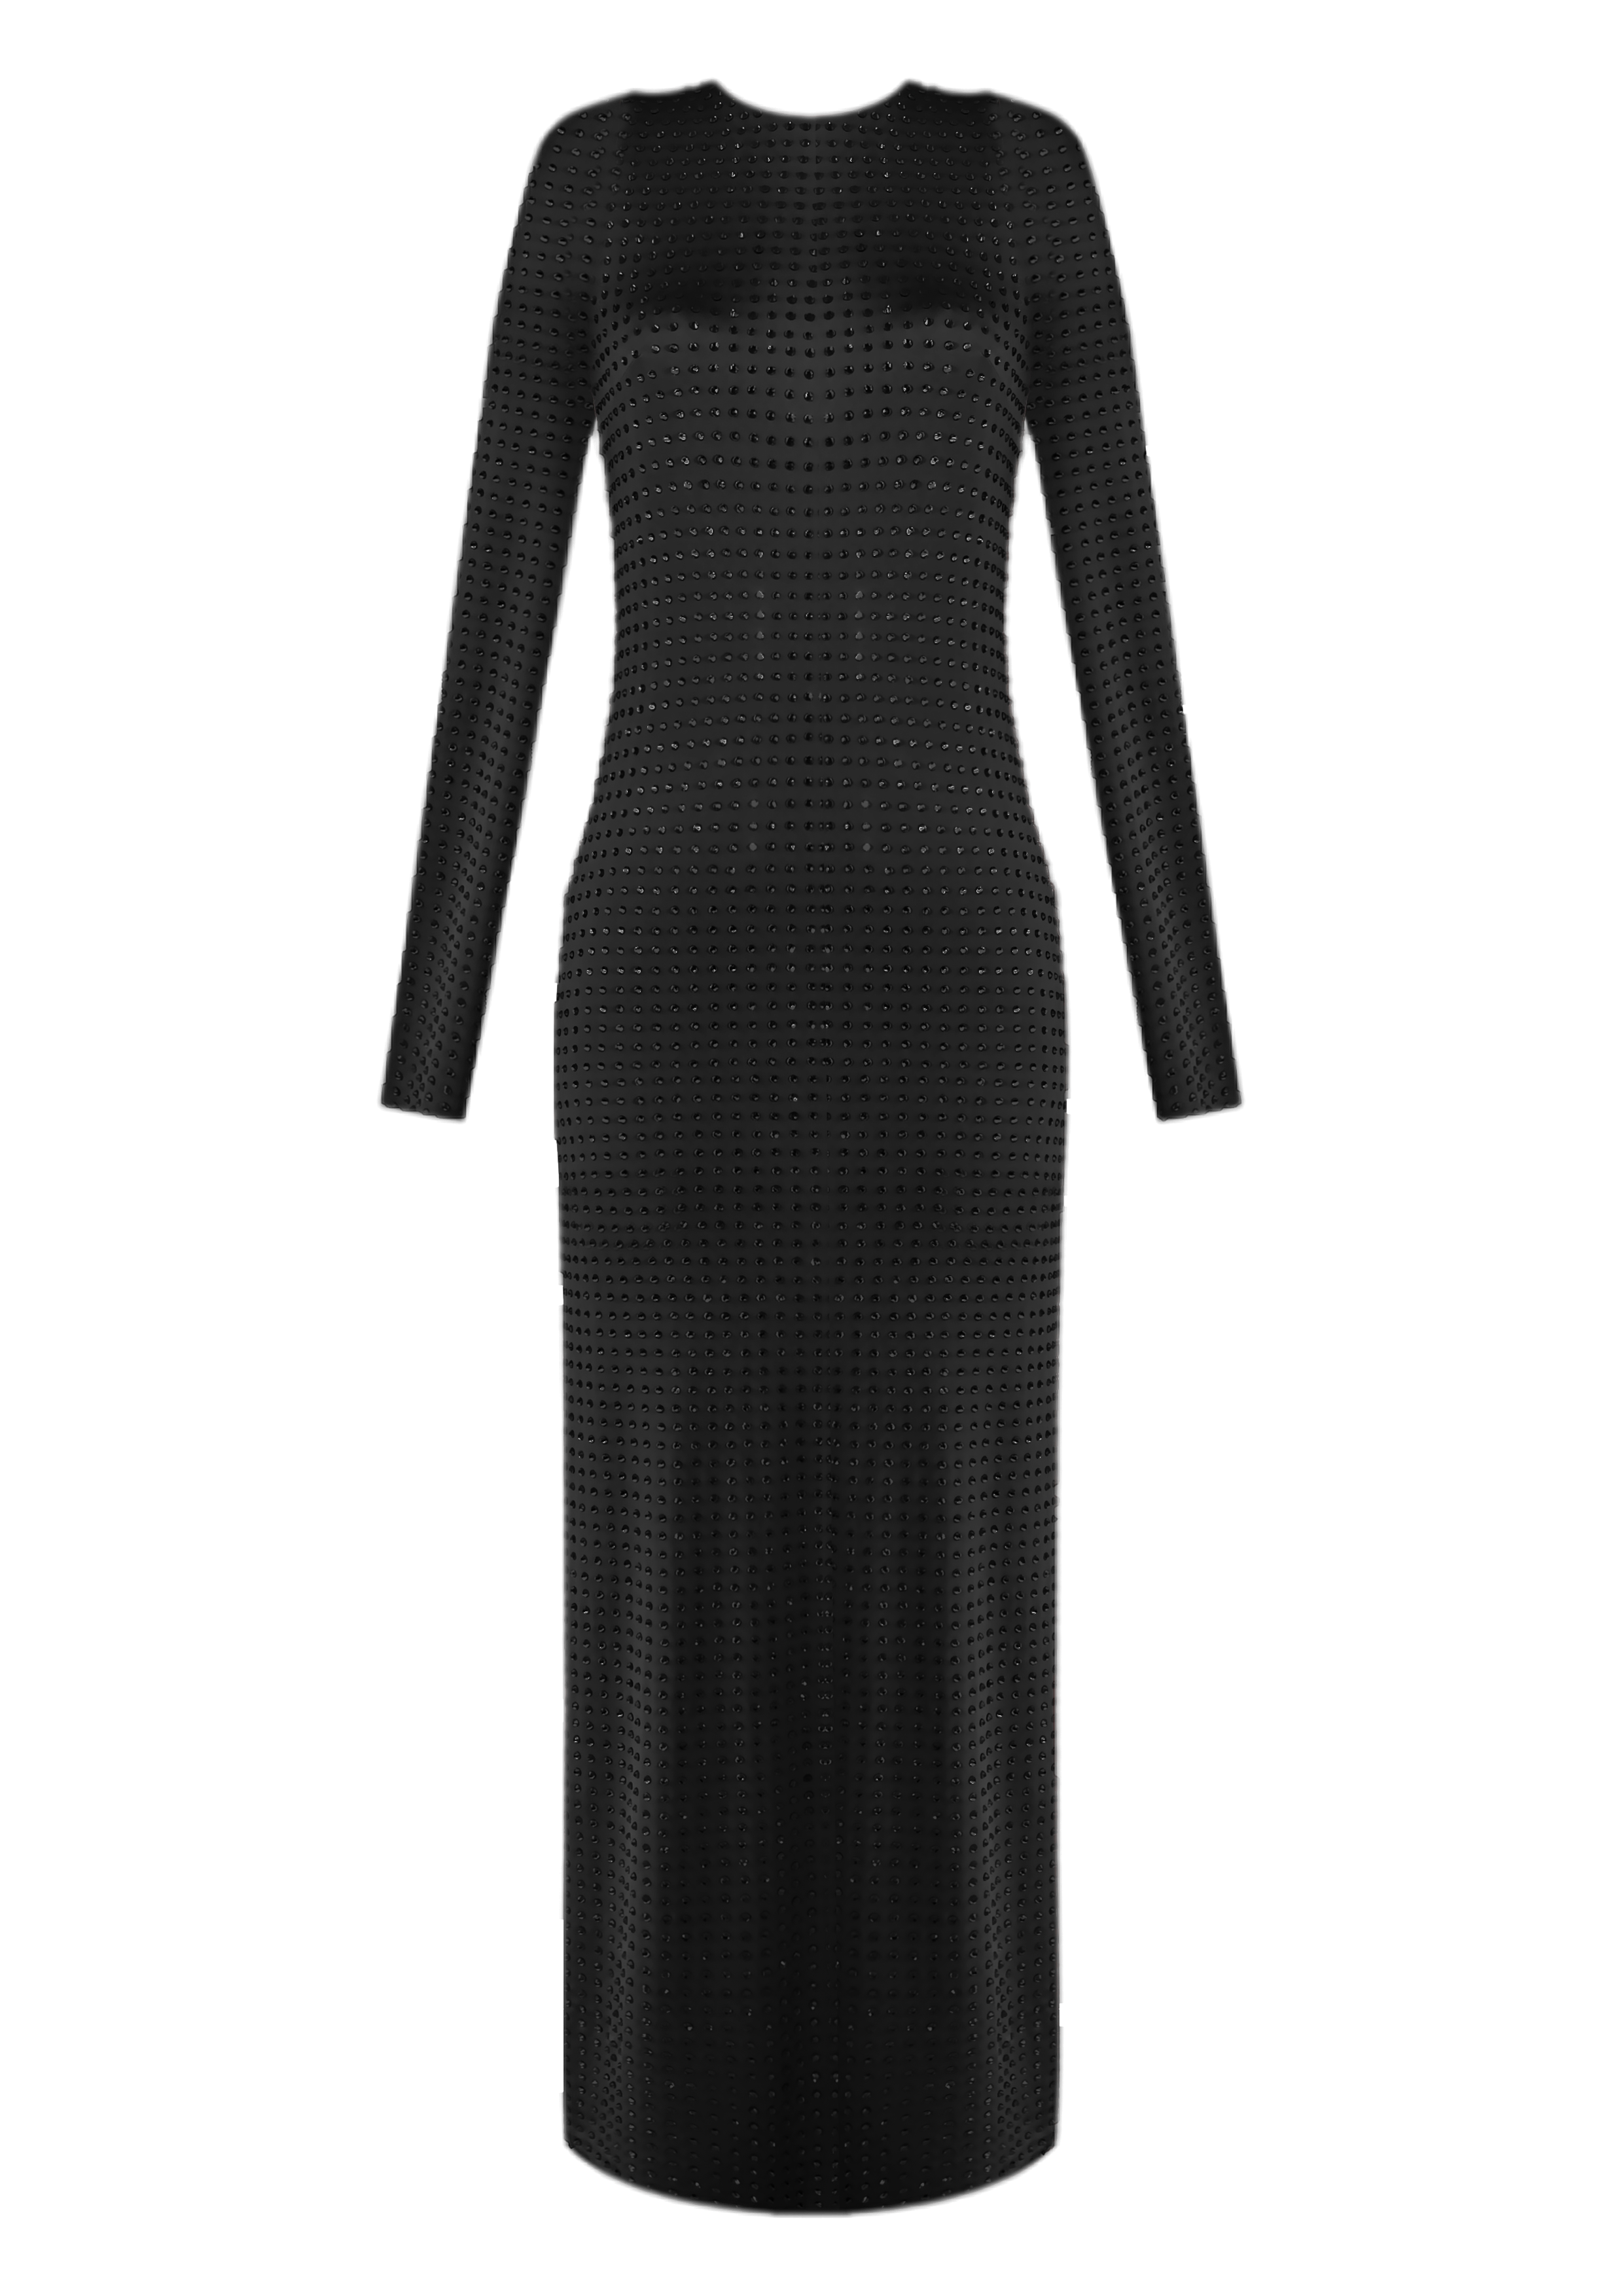 Gigii's Noa Long Sleeve Dress In Black